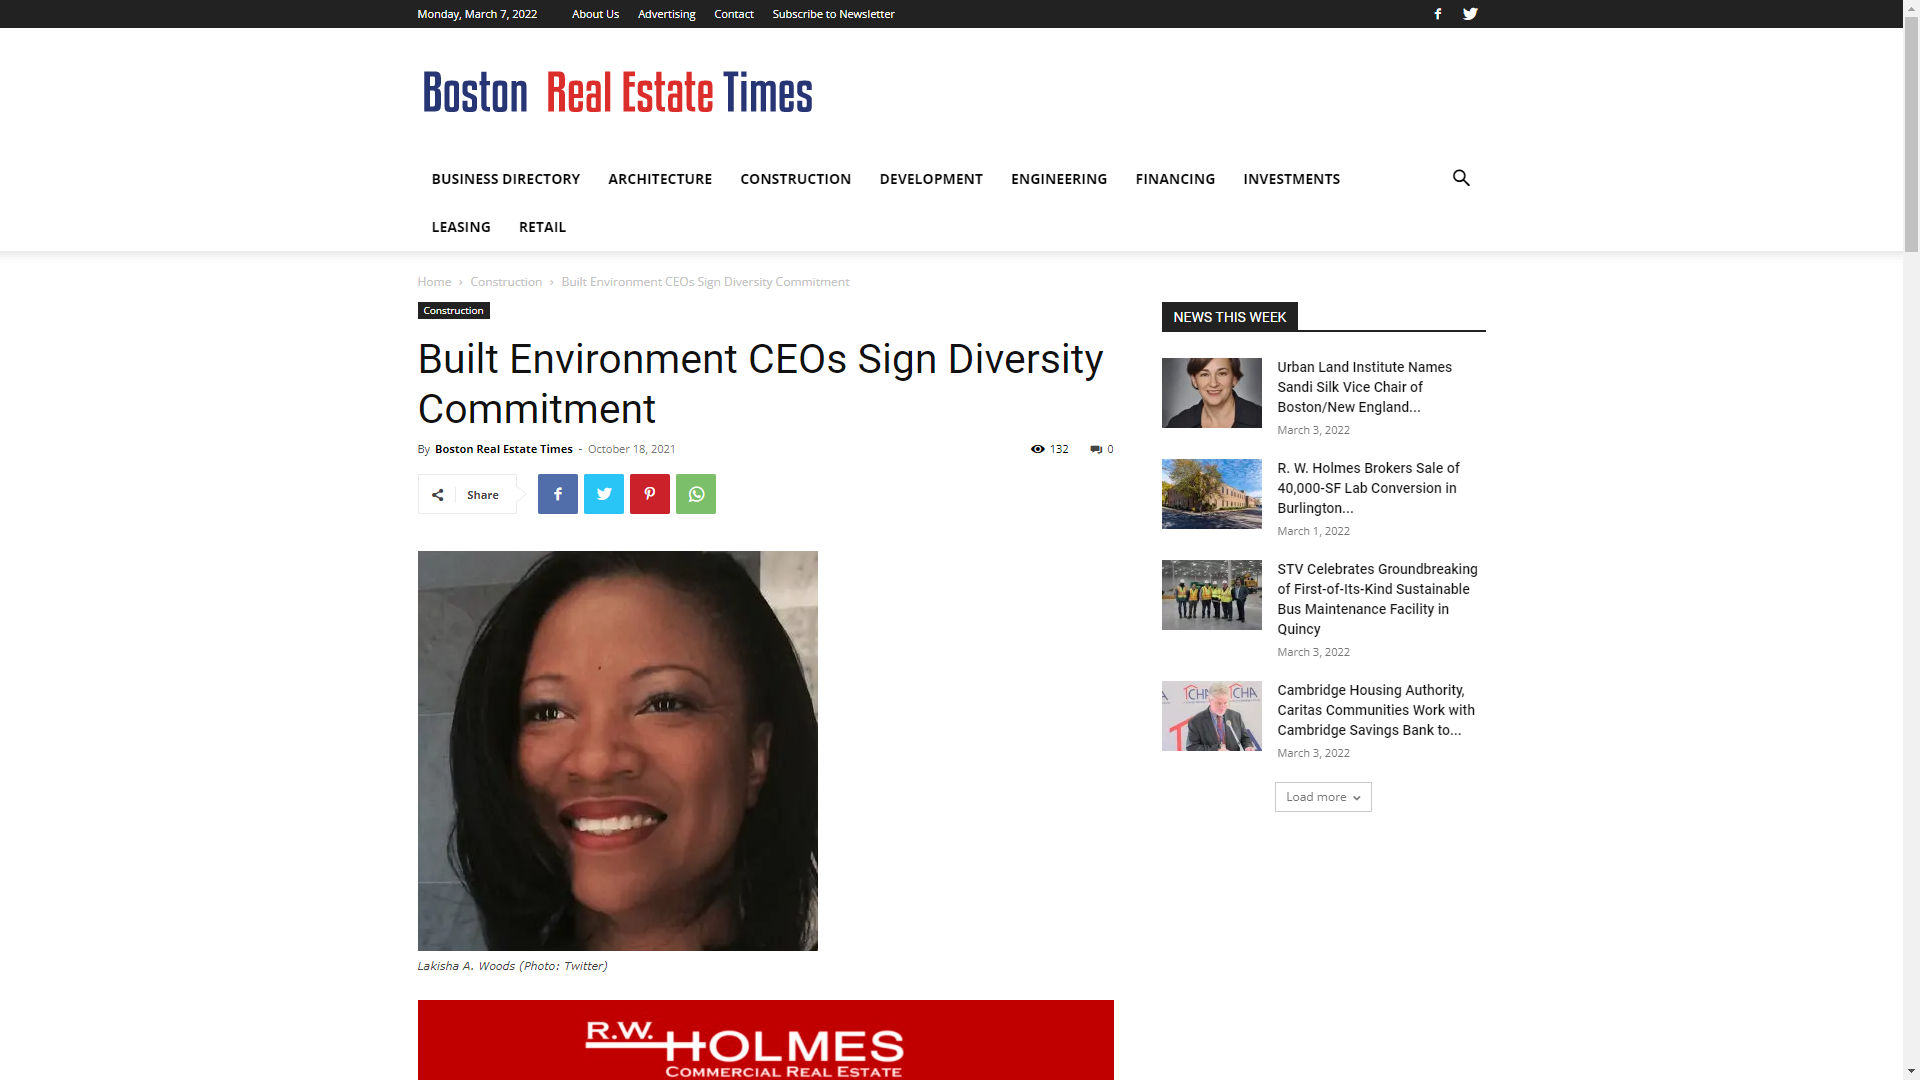 Built Environment CEOs Sign Diversity Commitment